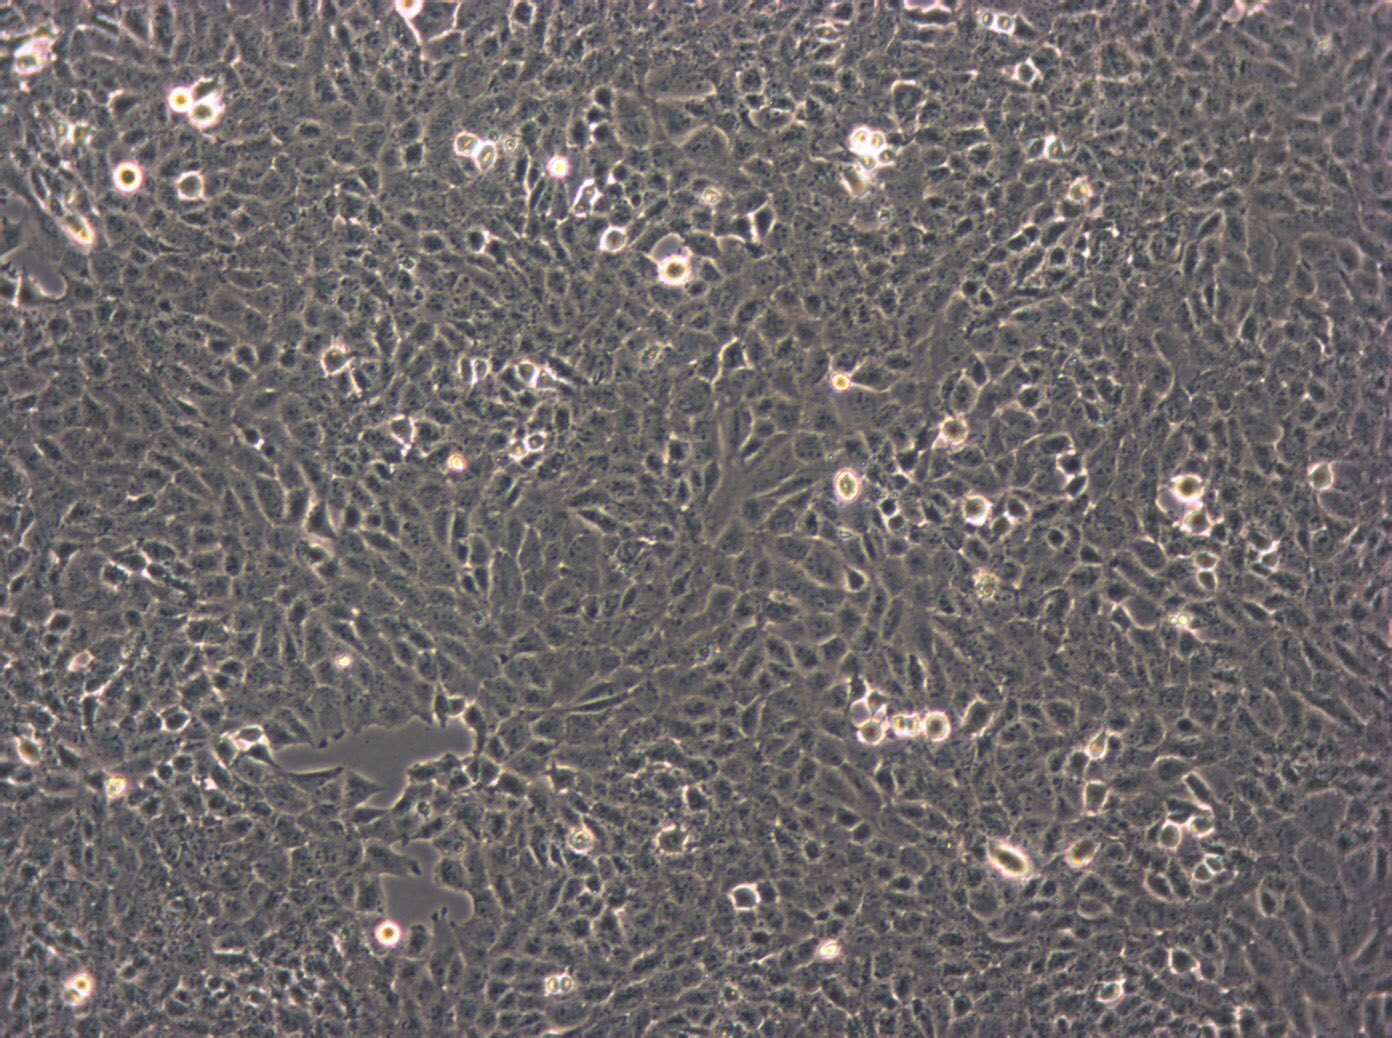 CHO-K1 Cell|中国仓鼠卵巢细胞,CHO-K1 Cell